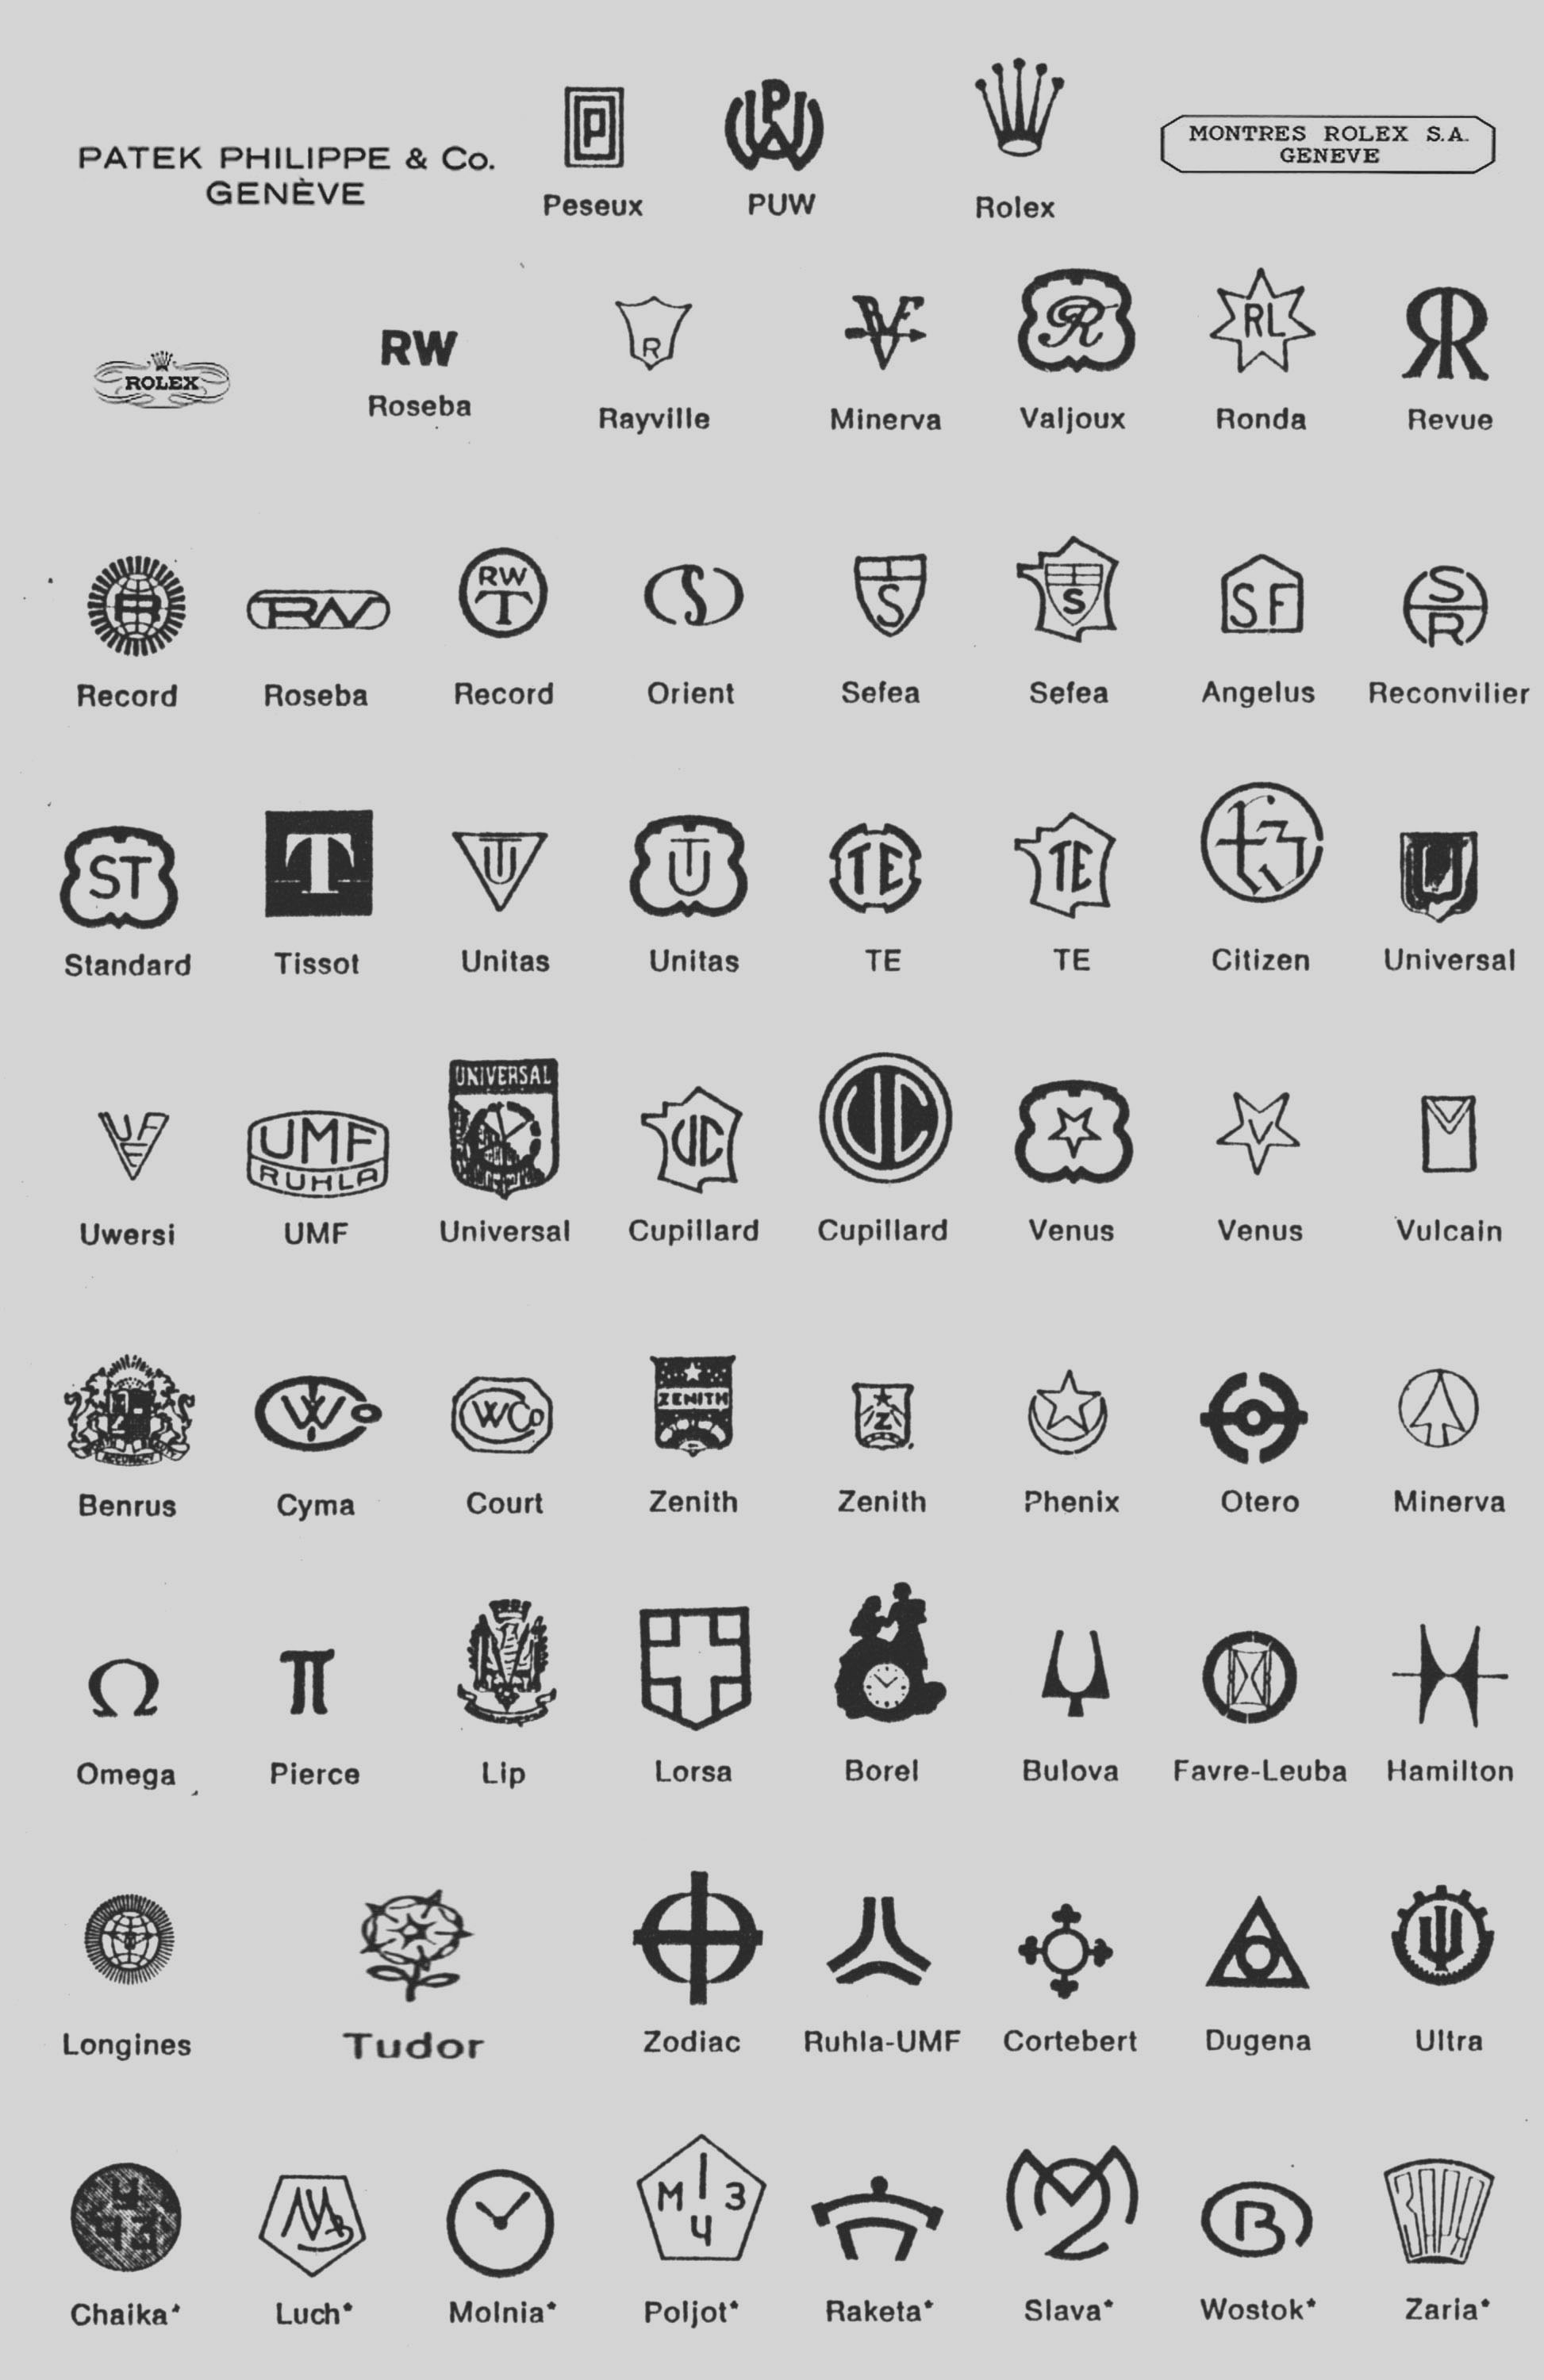 Watch Company Logos